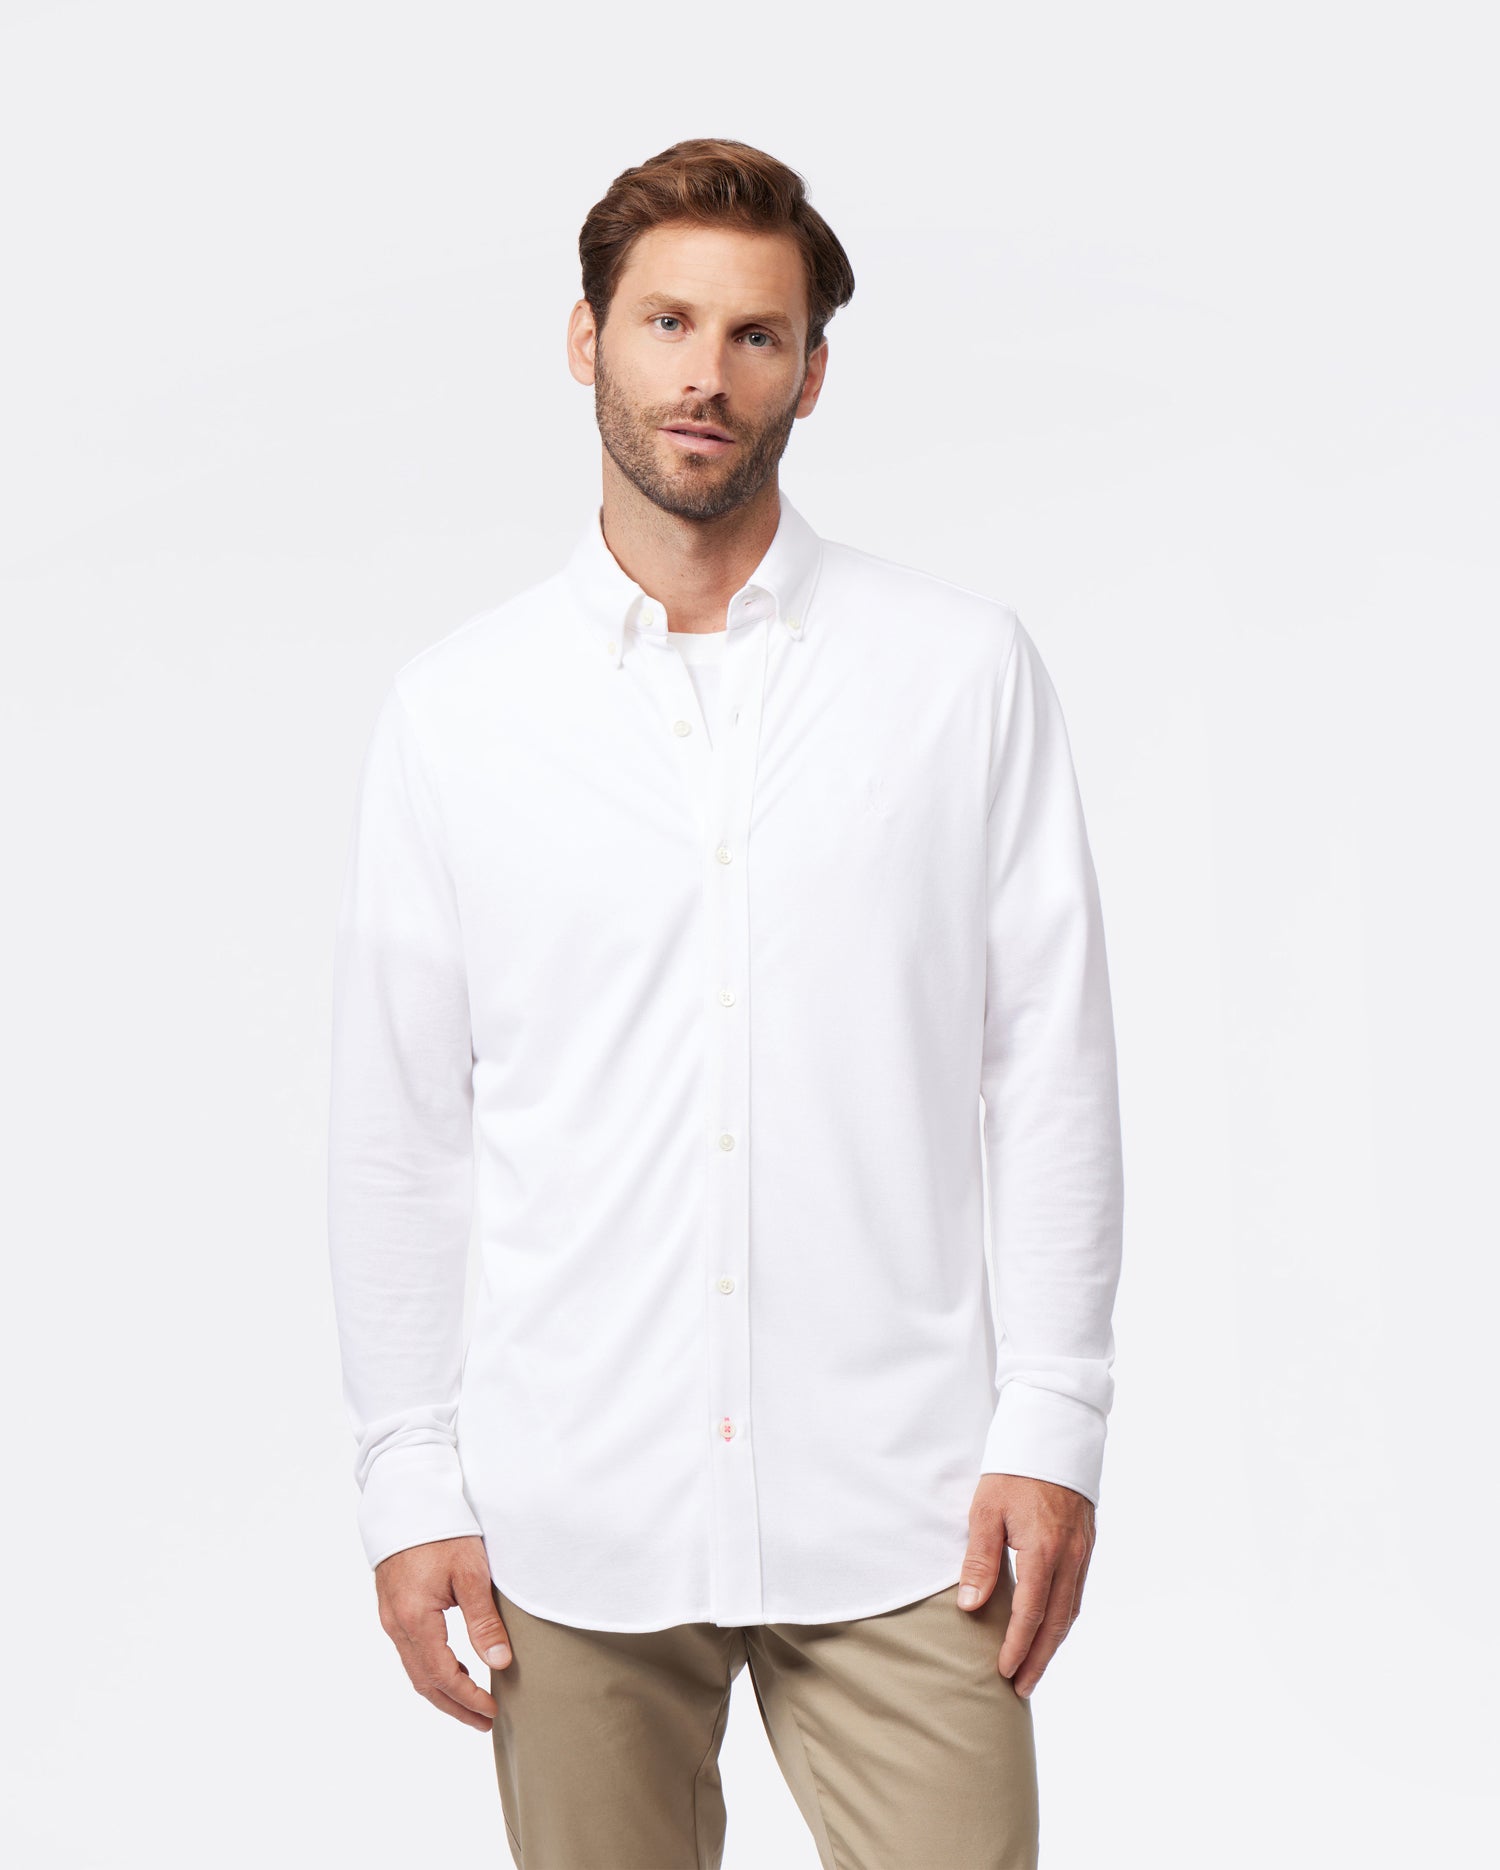 Shop Mens Long Sleeve Shirts Casual Trendy Sweatshirts Sport